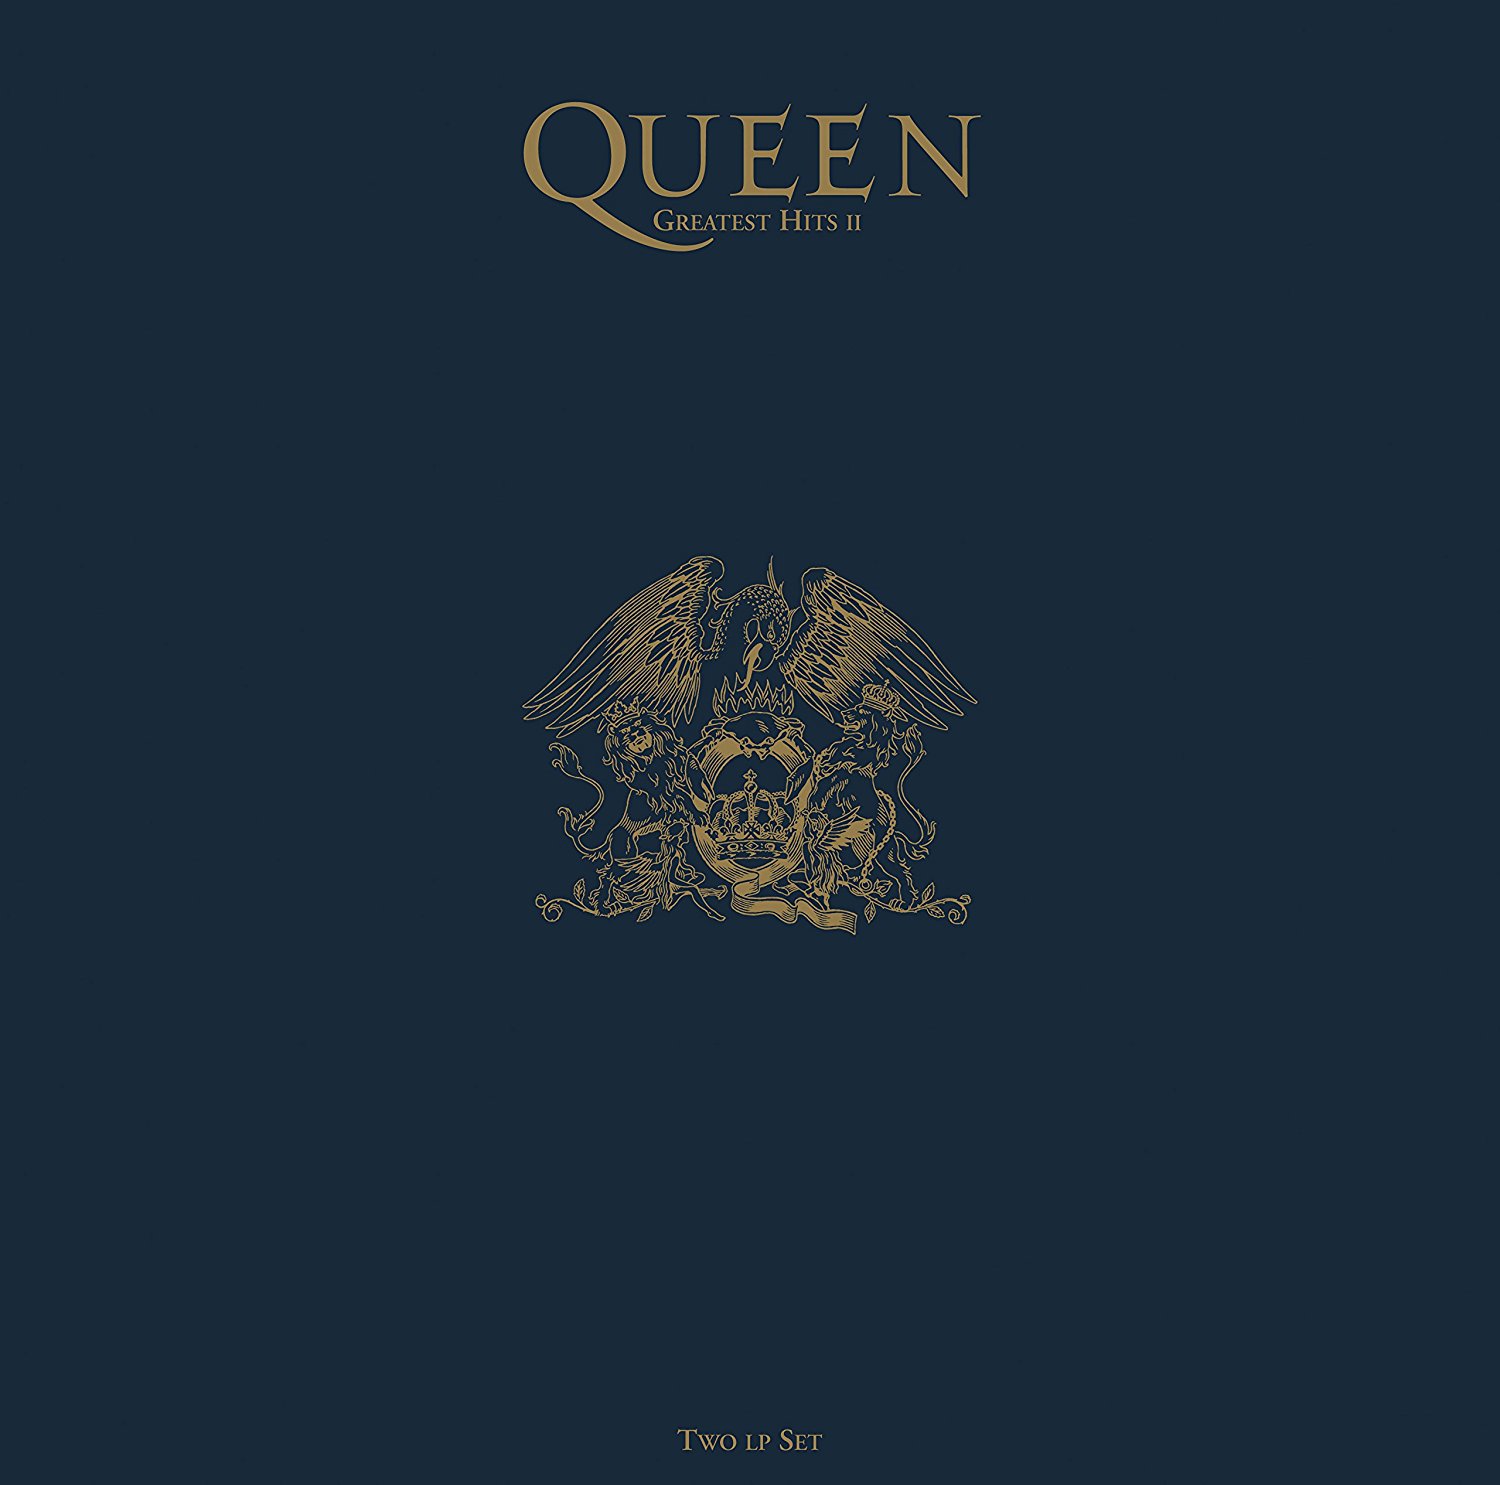 http://www.ritornoalvinile.com/img/Queen-Greatest-Hits-II-Album-Compilation-Vinile-lp3.jpg